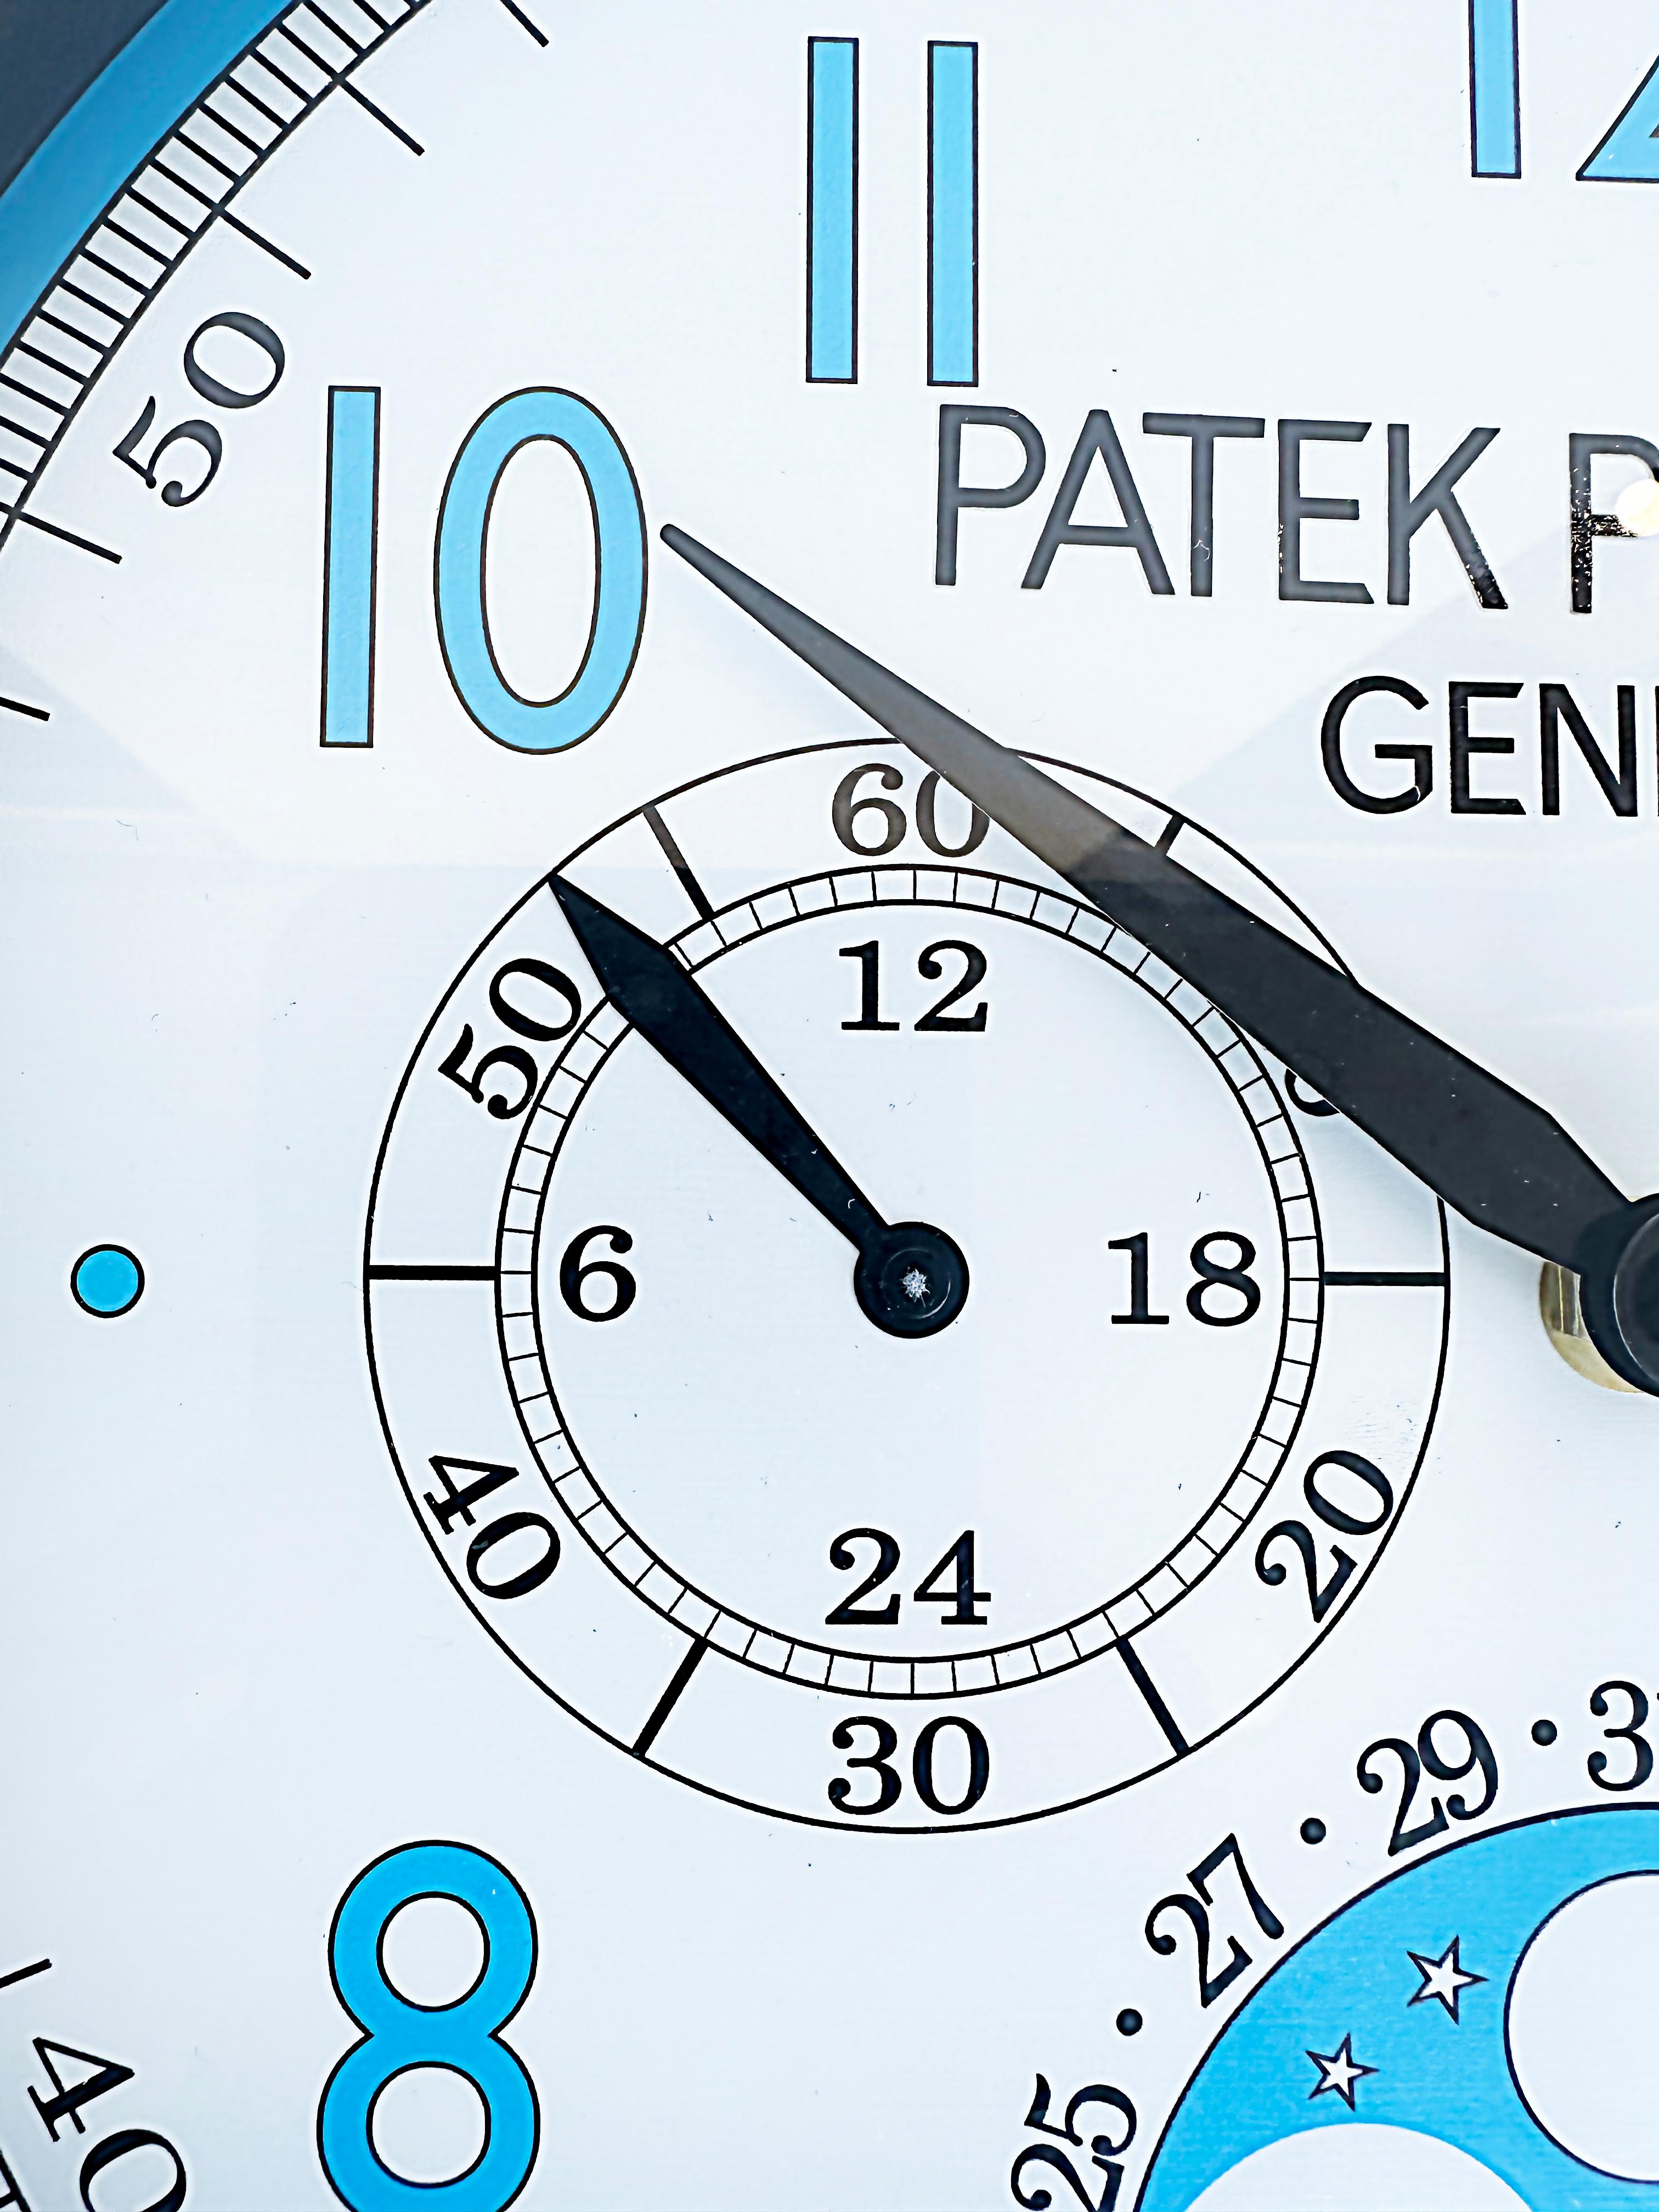 Contemporary Patek Philippe Geneve, Switzerland Dealer's Advertising Chronograph Wall Clock